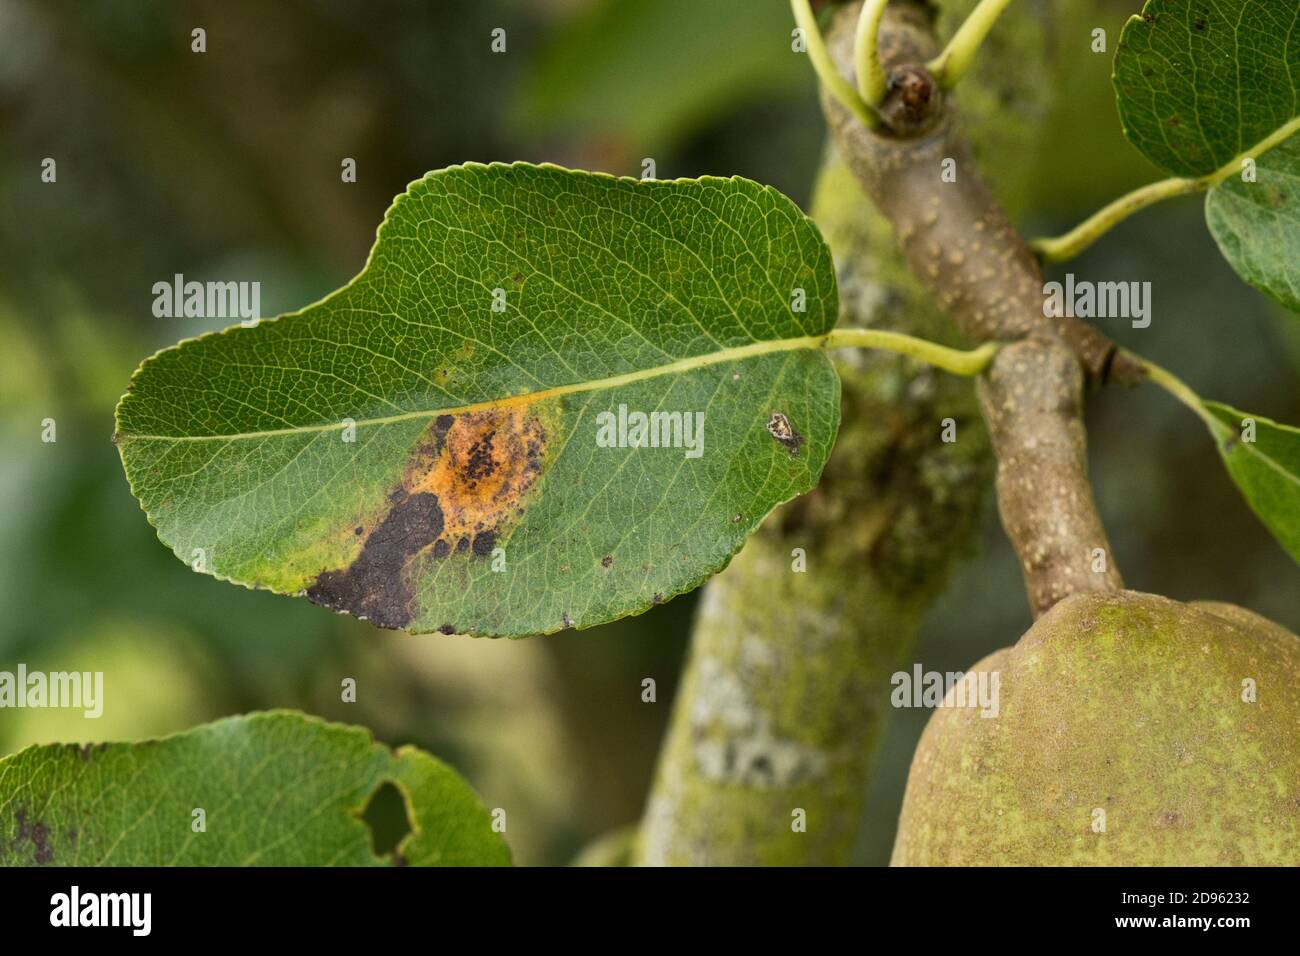 European pear rust or pear trellis rust (Gymnosporangium sabinae) lesions on the upper surface of a pear leaf, Berkshire, September Stock Photo